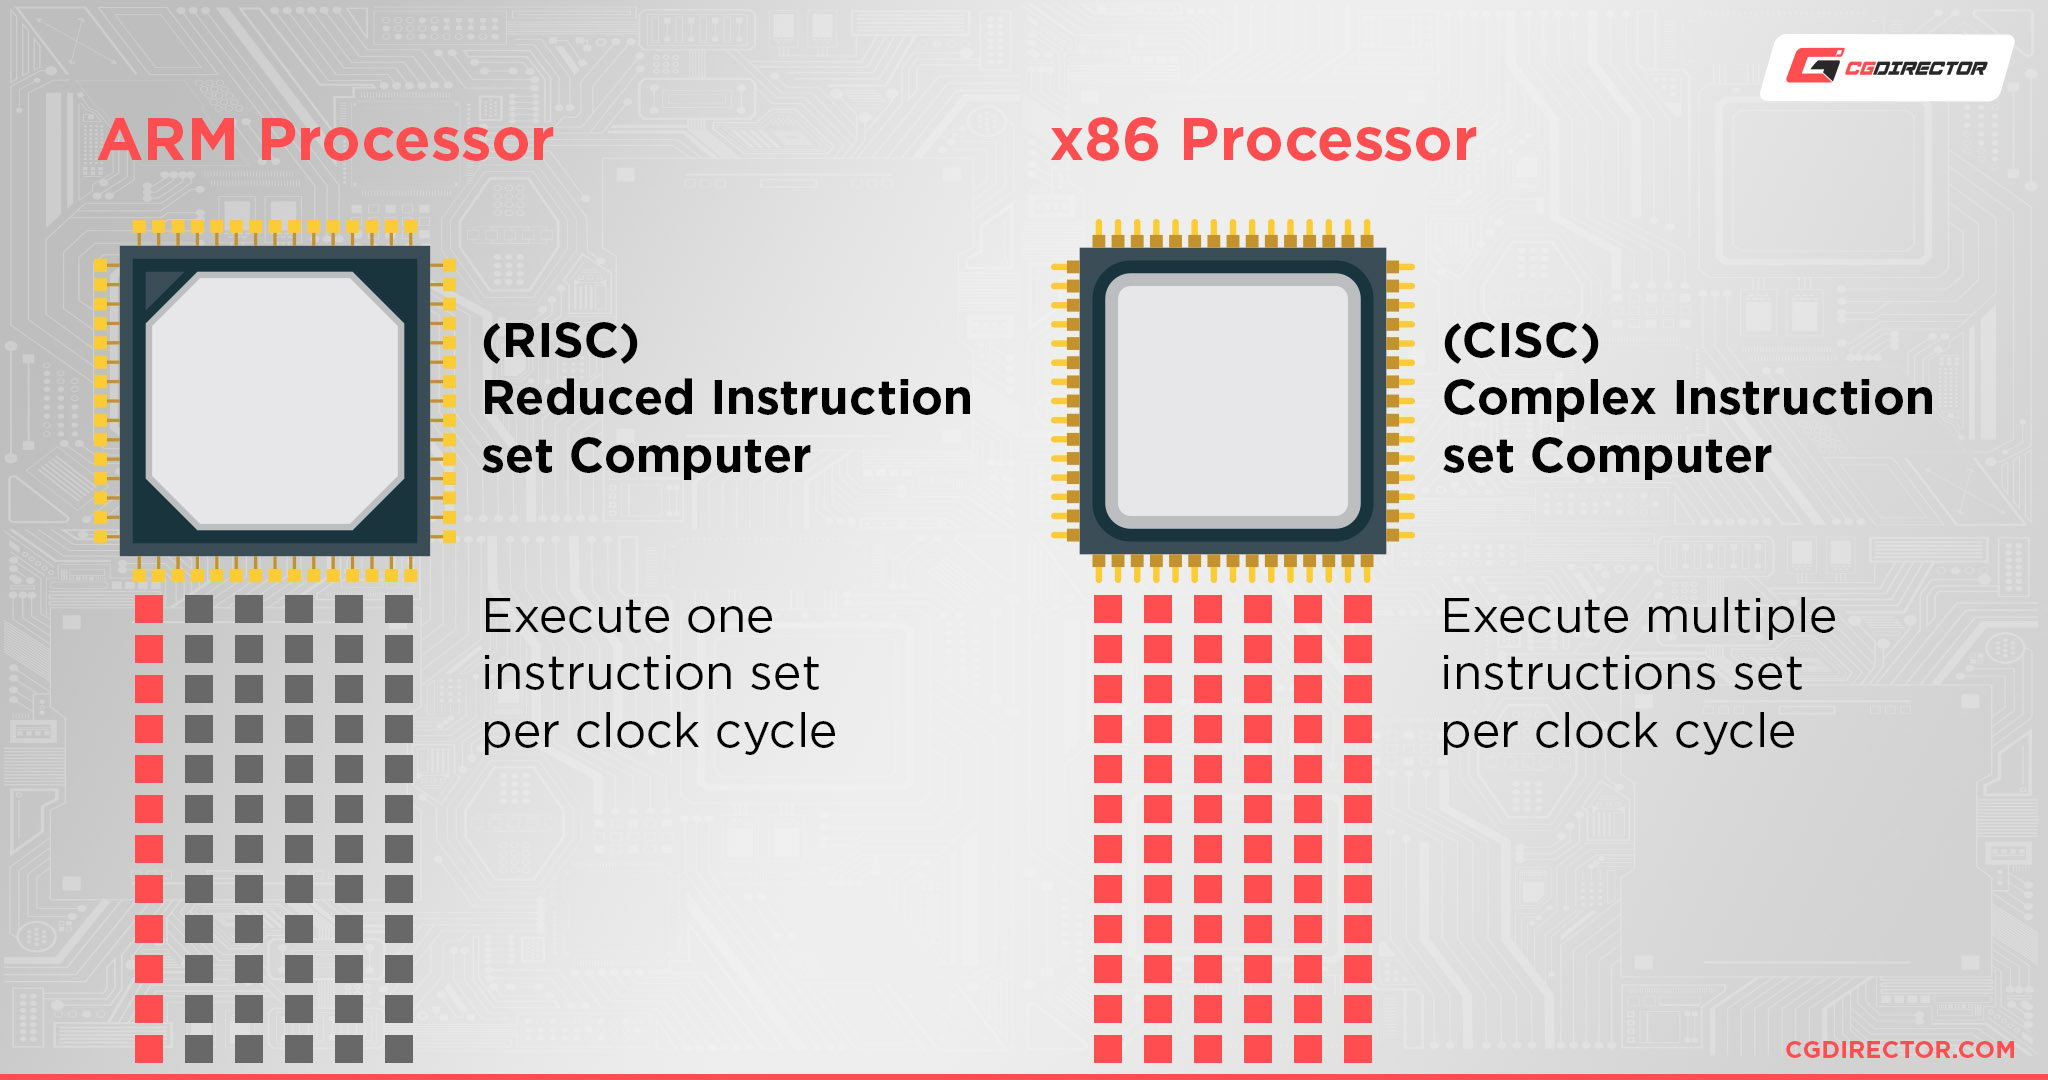 ARM vs x86 Processors